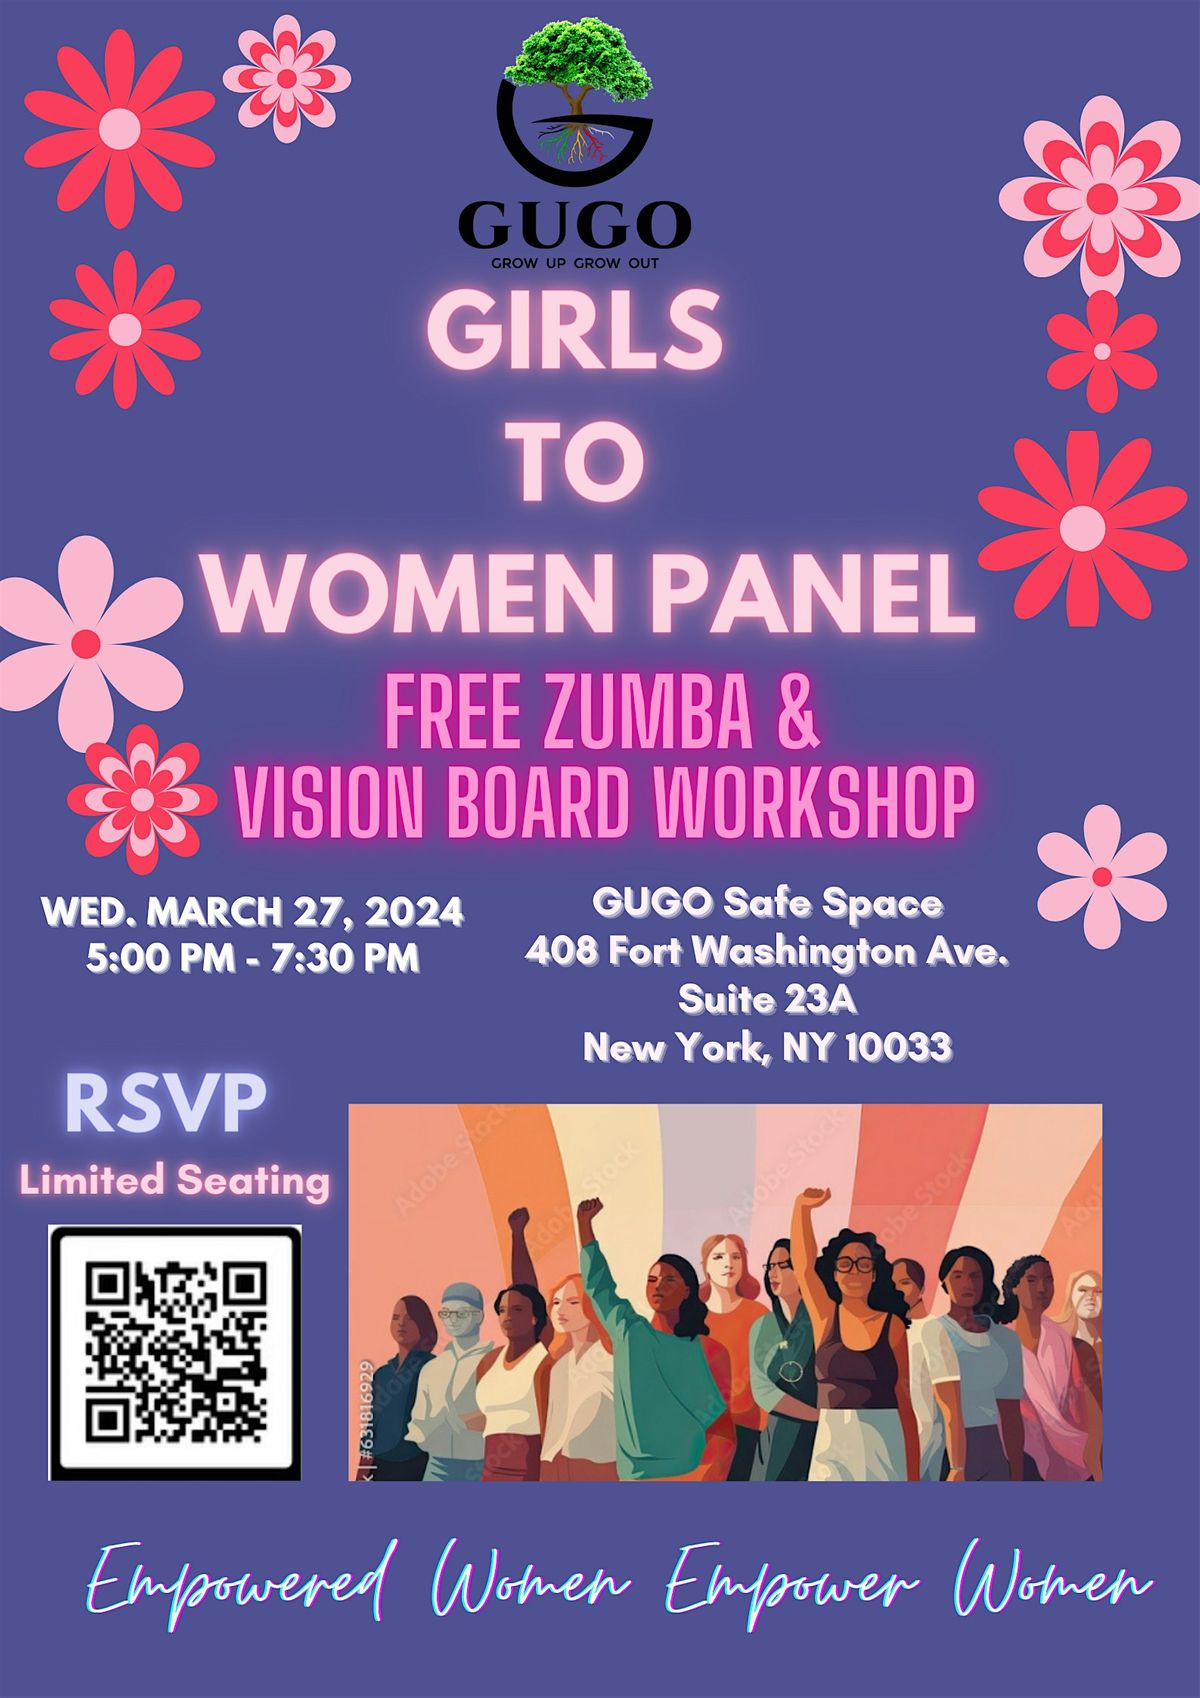 GUGO Presents Girls to Women Panel FREE Zumba & Vision Board Workshops